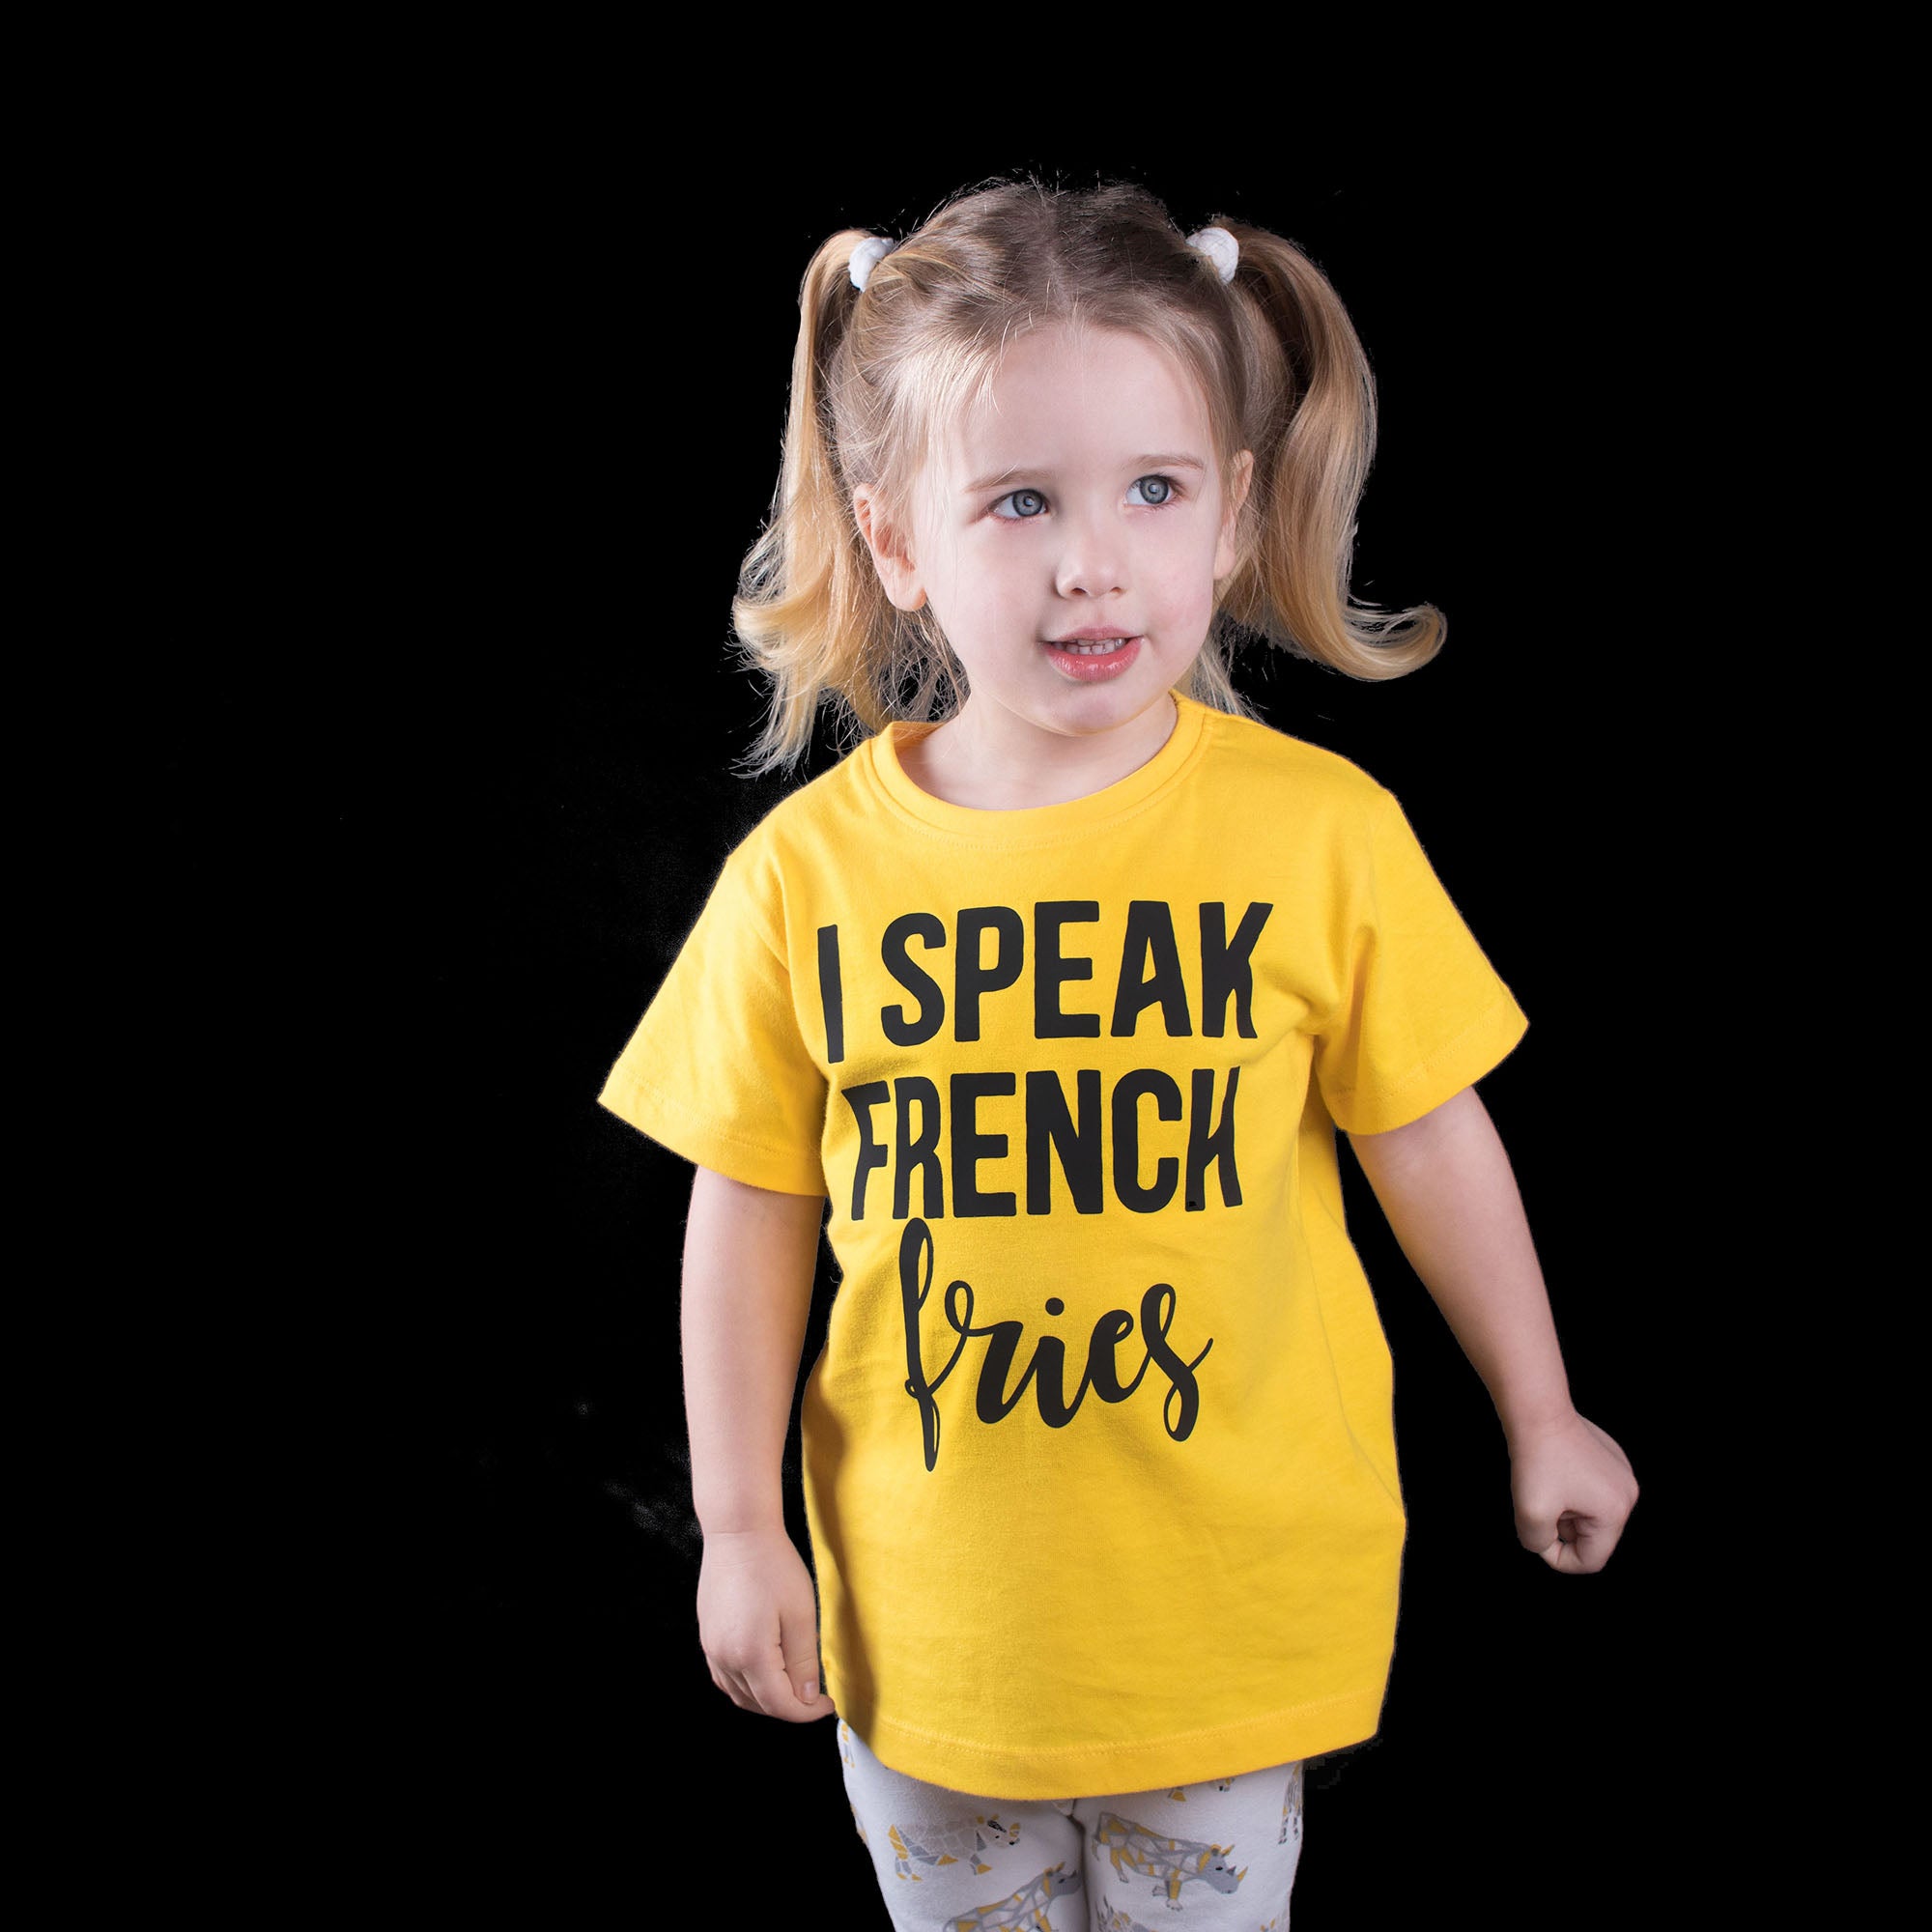 'I speak French fries' kids shortsleeve shirt